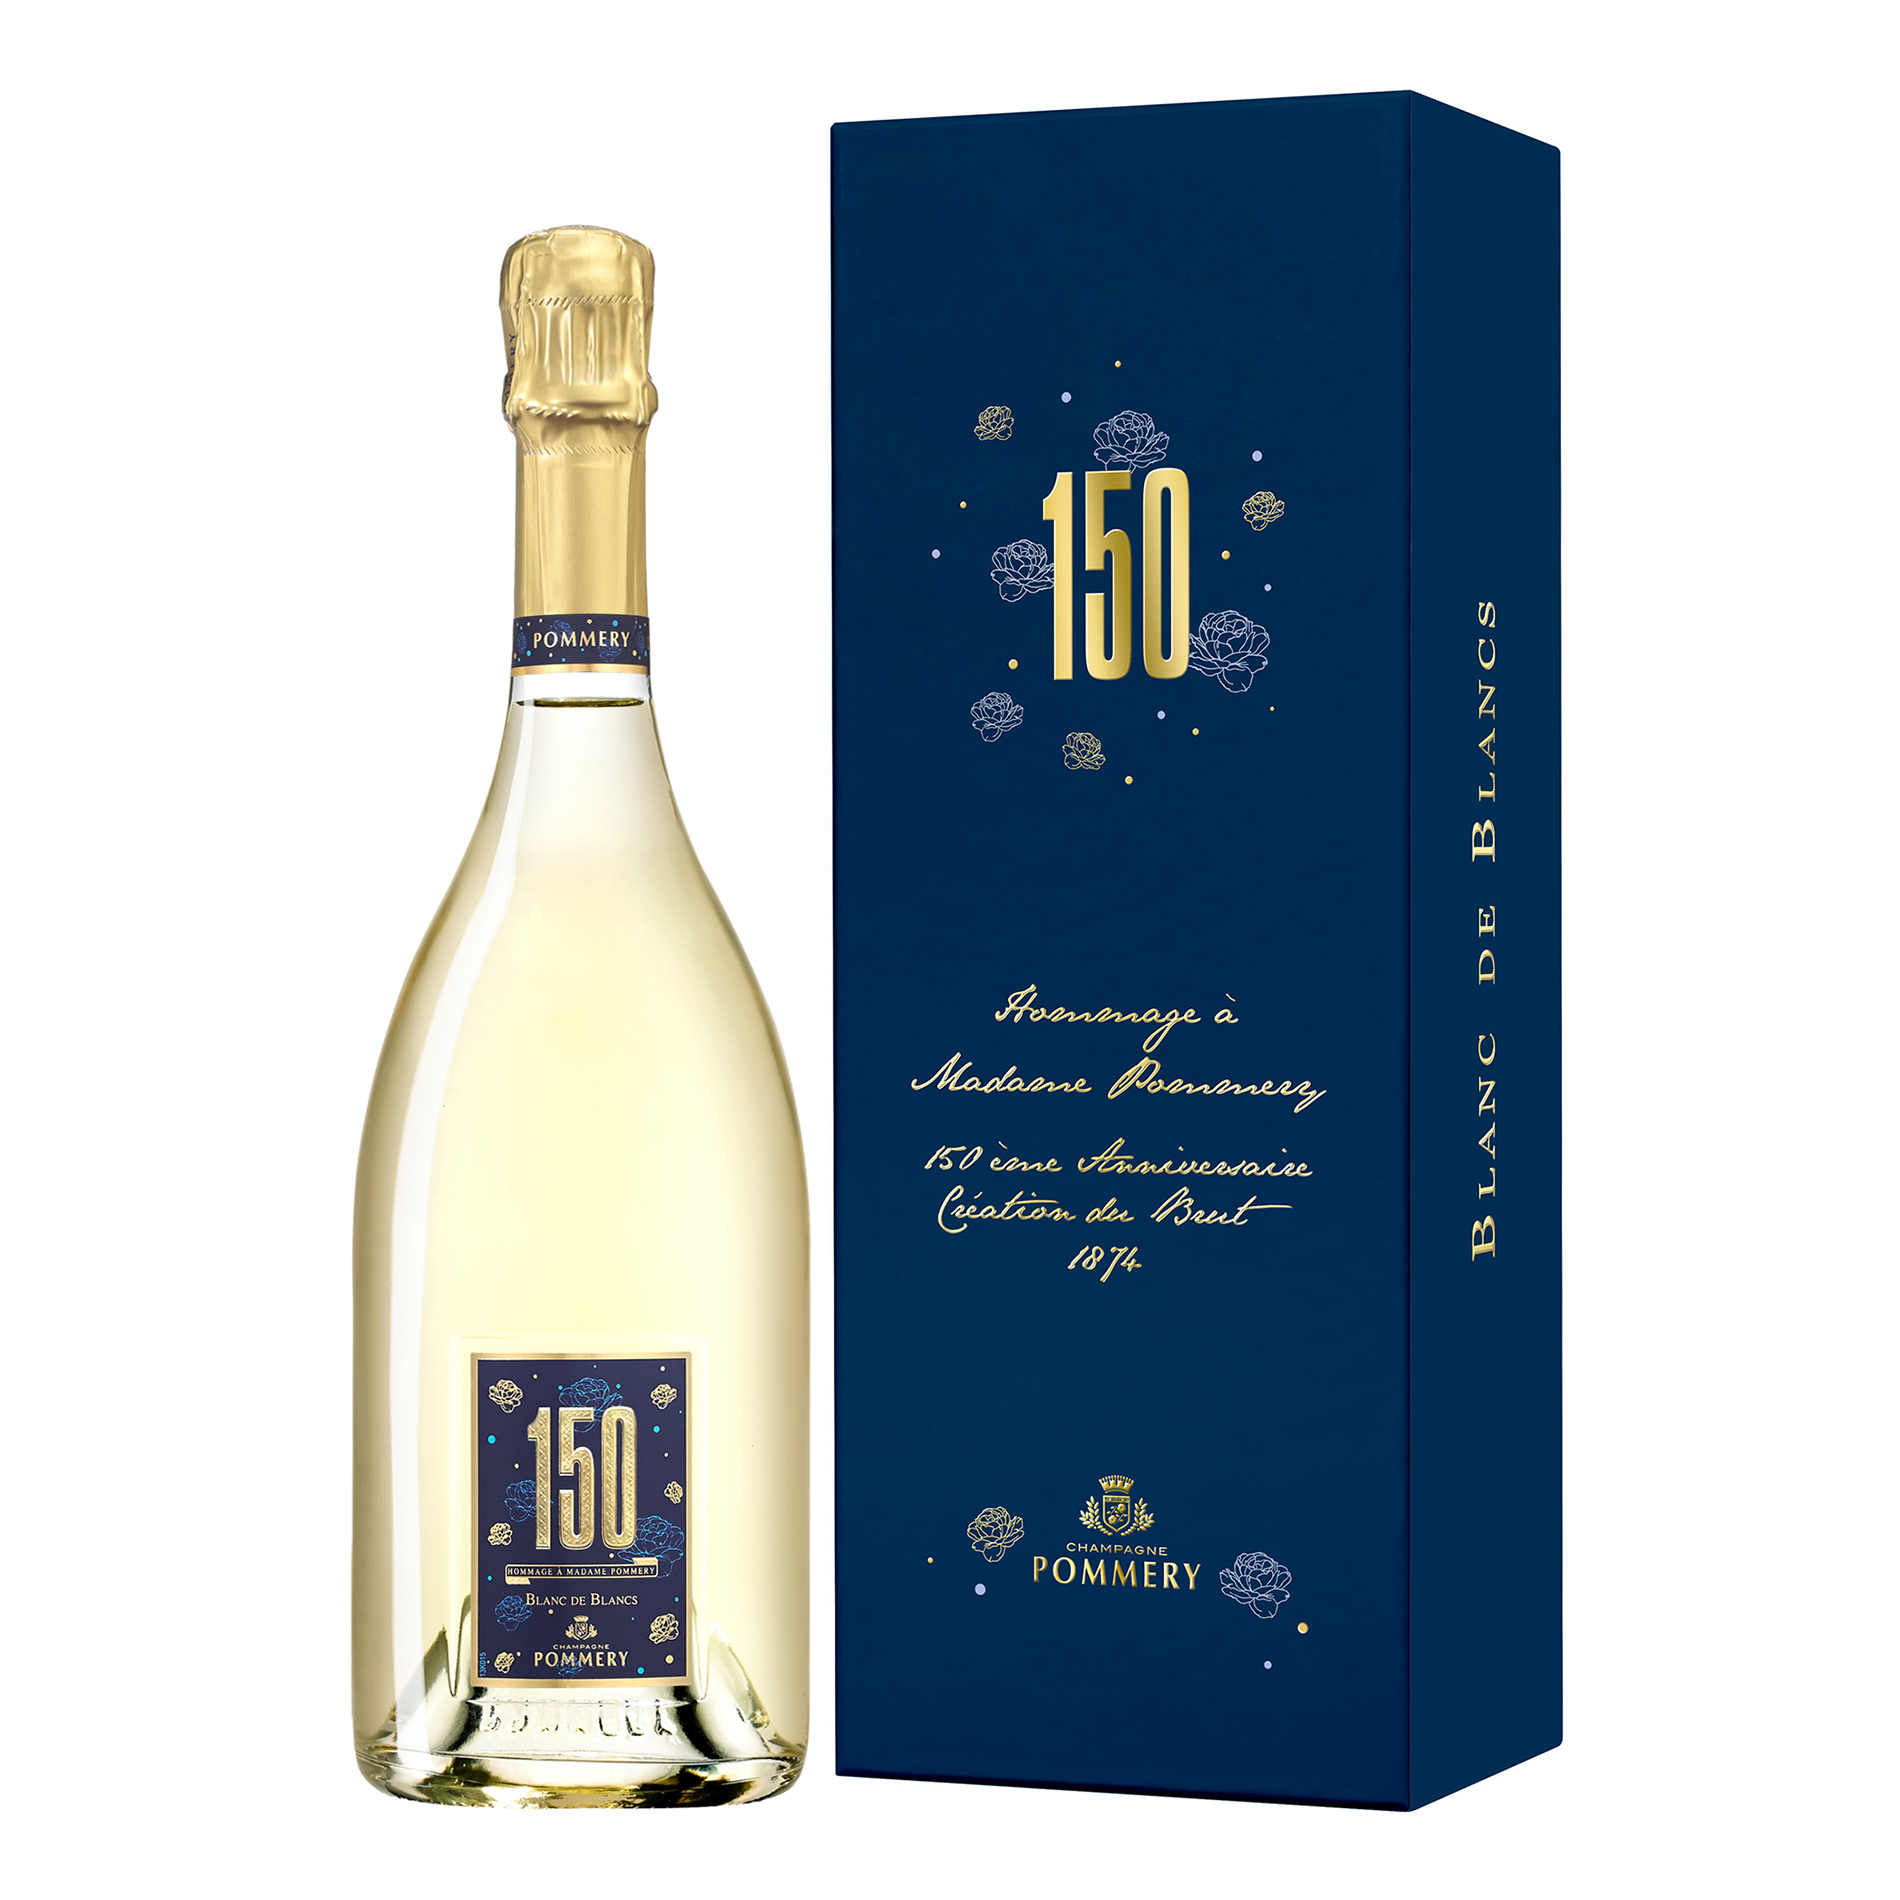 Pommery Blanc de Blancs Champagne